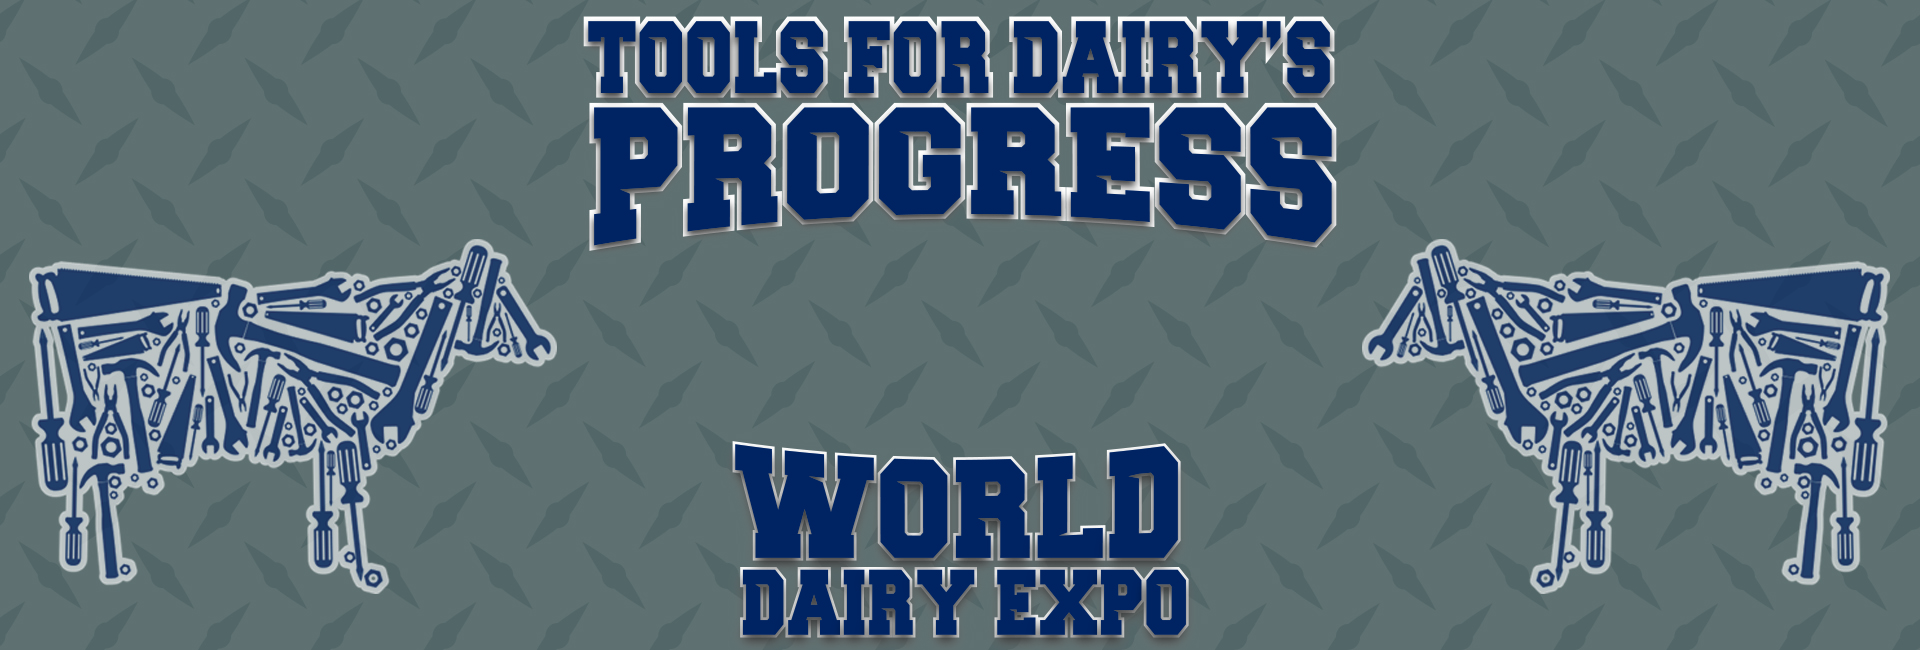 world dairy expo dates